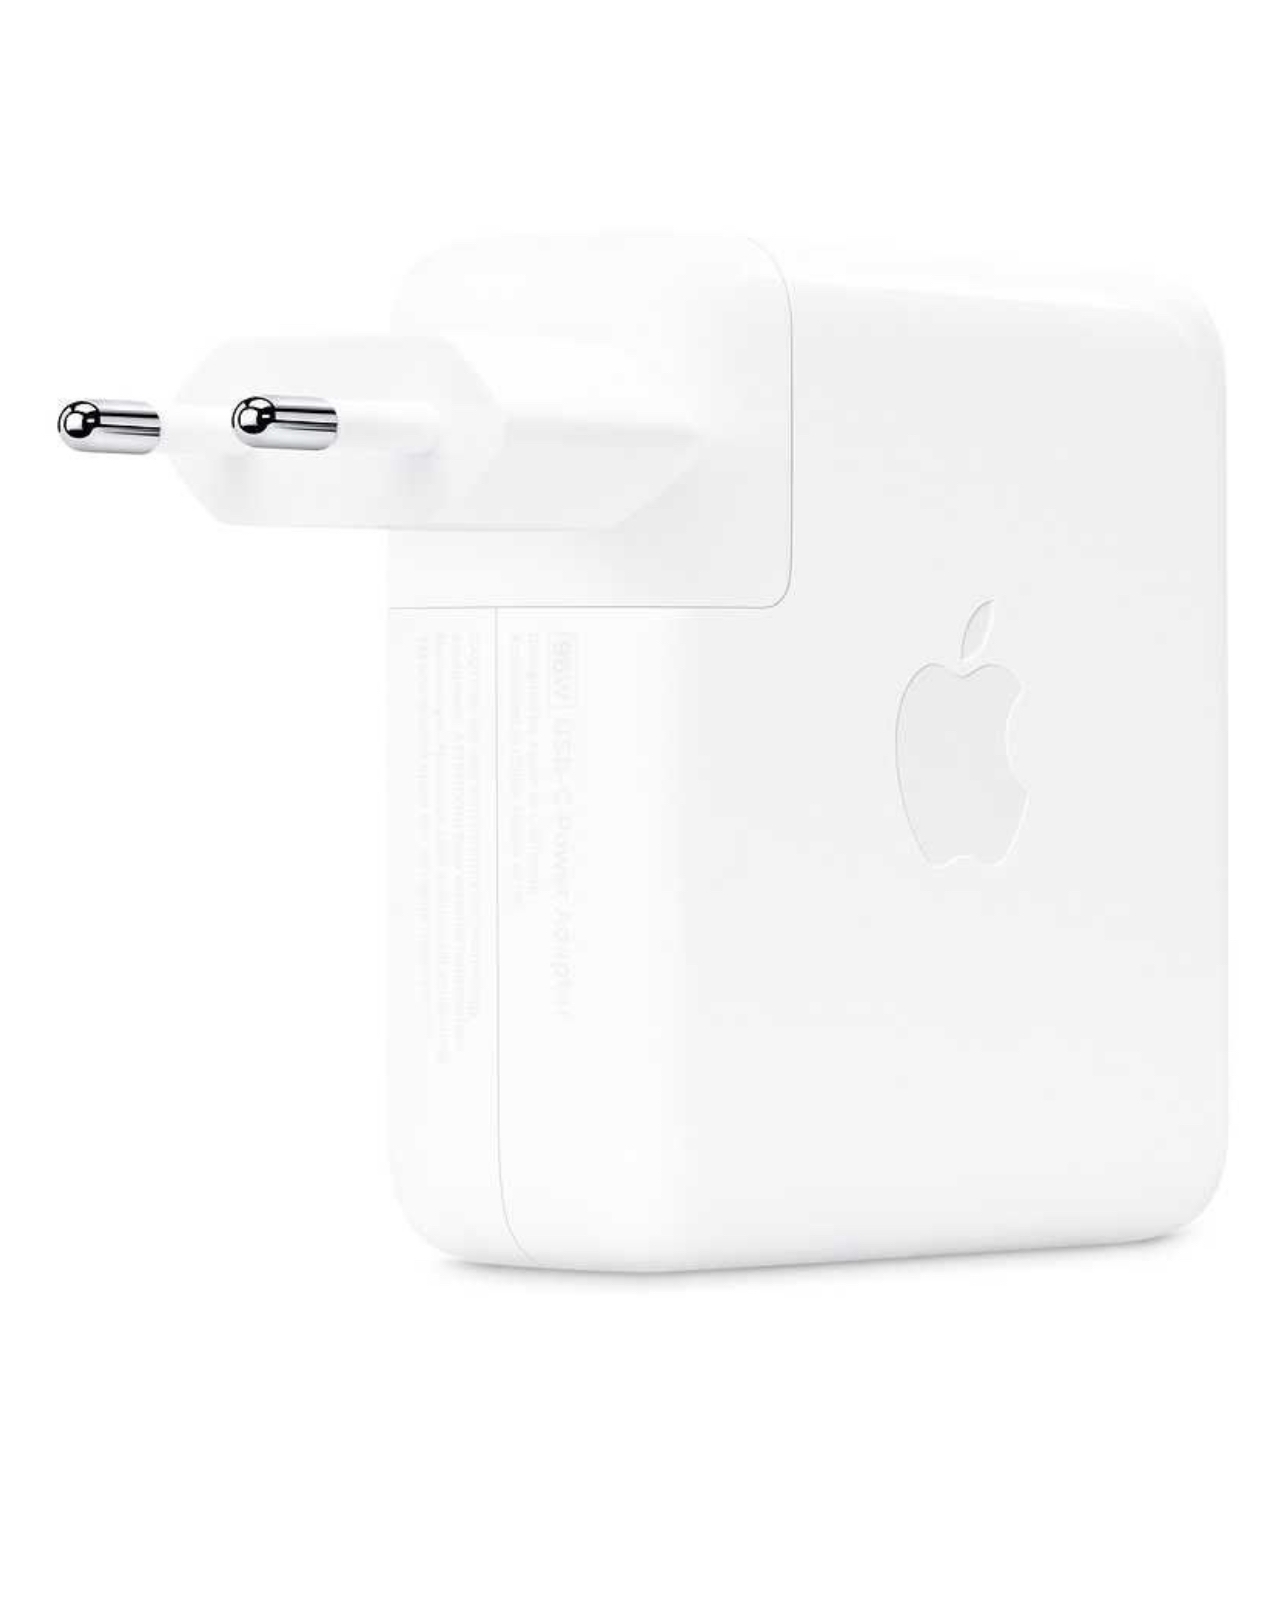 Apple USB-C Power Adapter USB-C Port мощностью  96Вт/ 96W (MX0J2ZM/A)